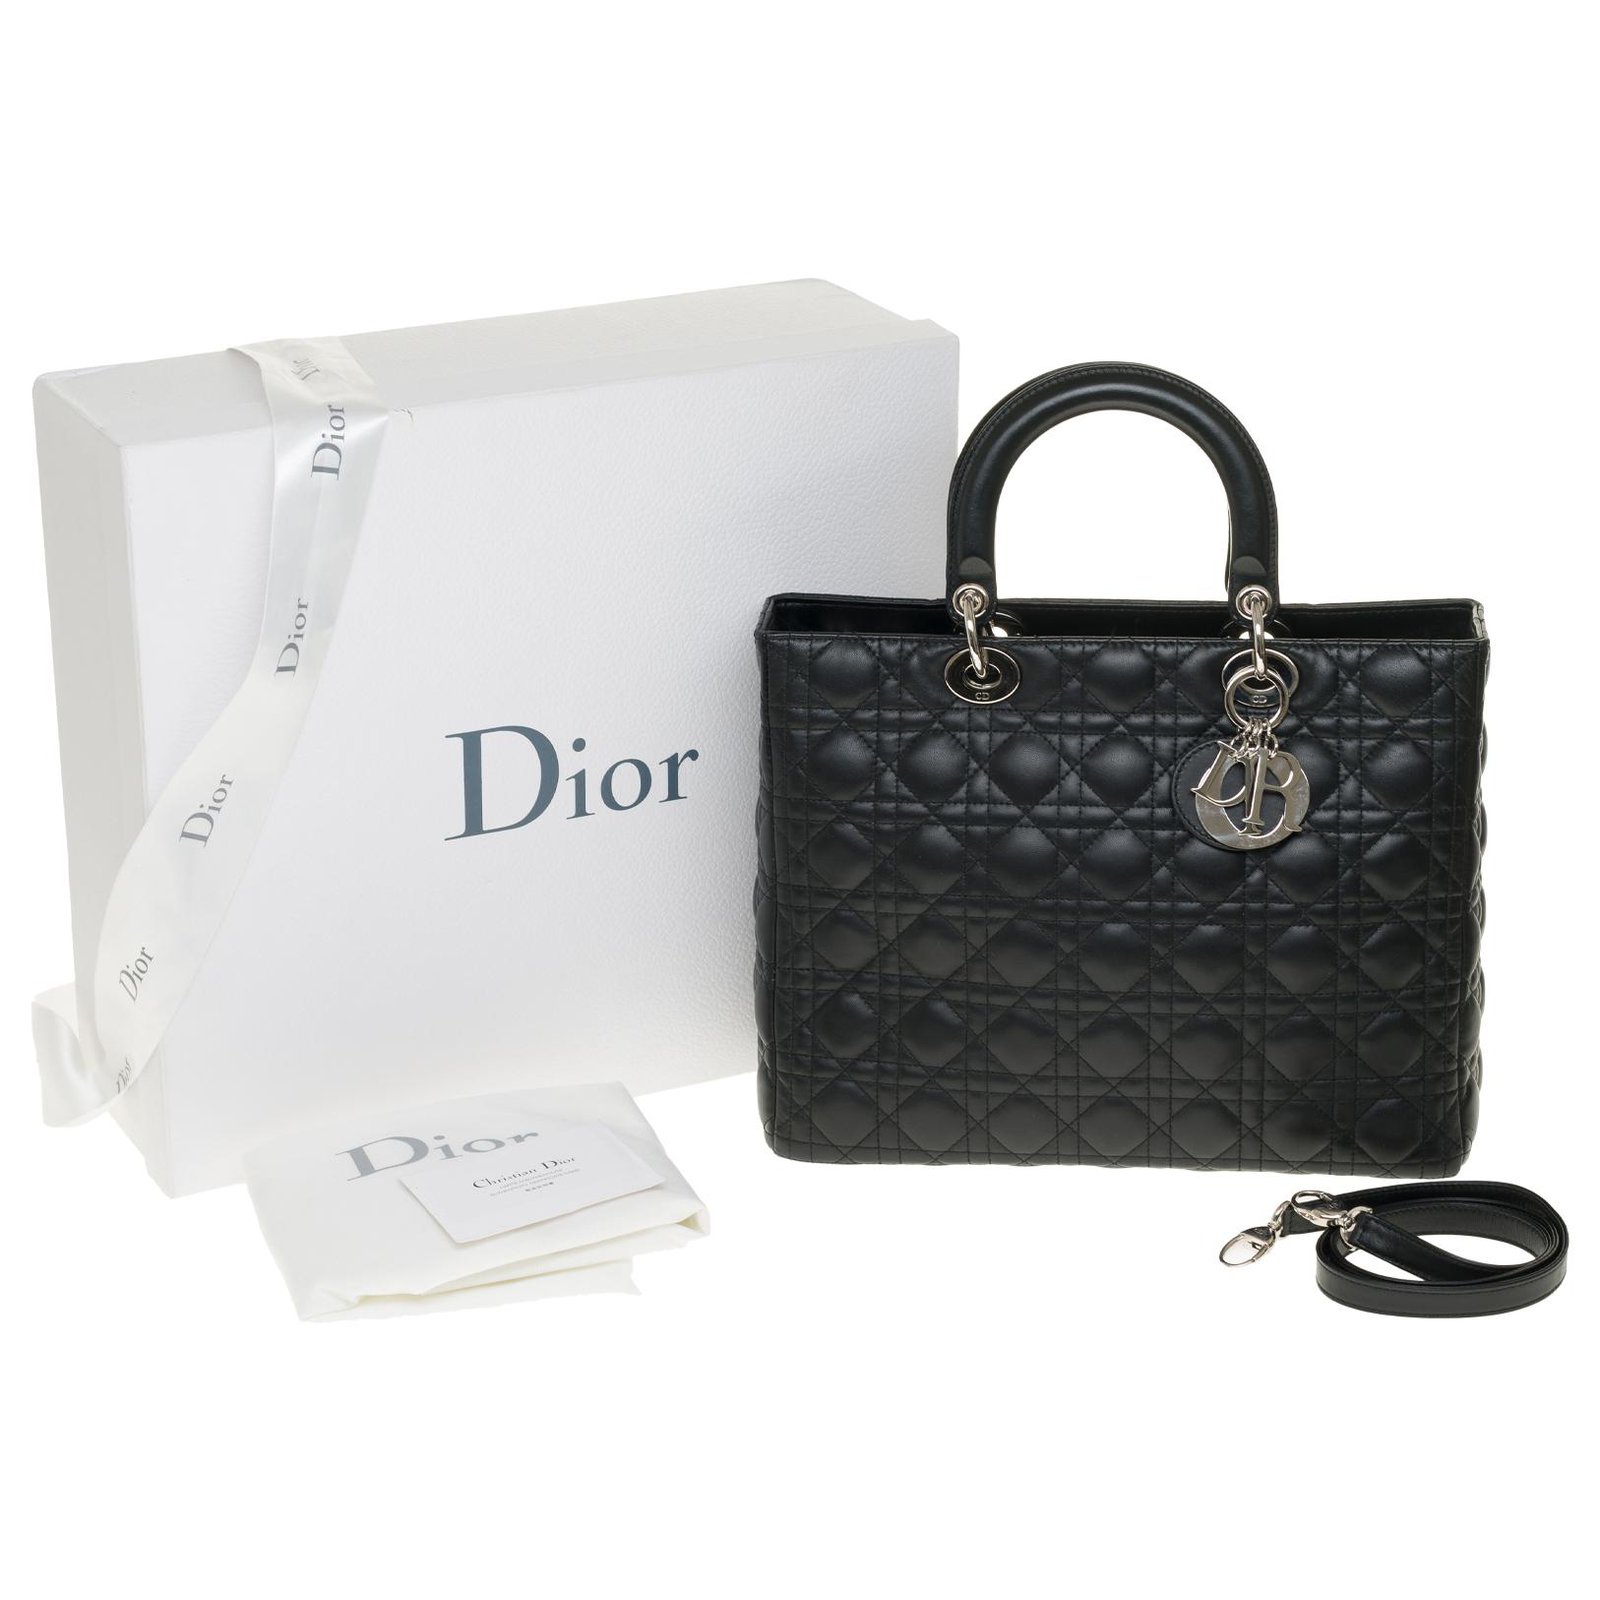 Splendid Christian Dior Lady Dior large model (GM) with black